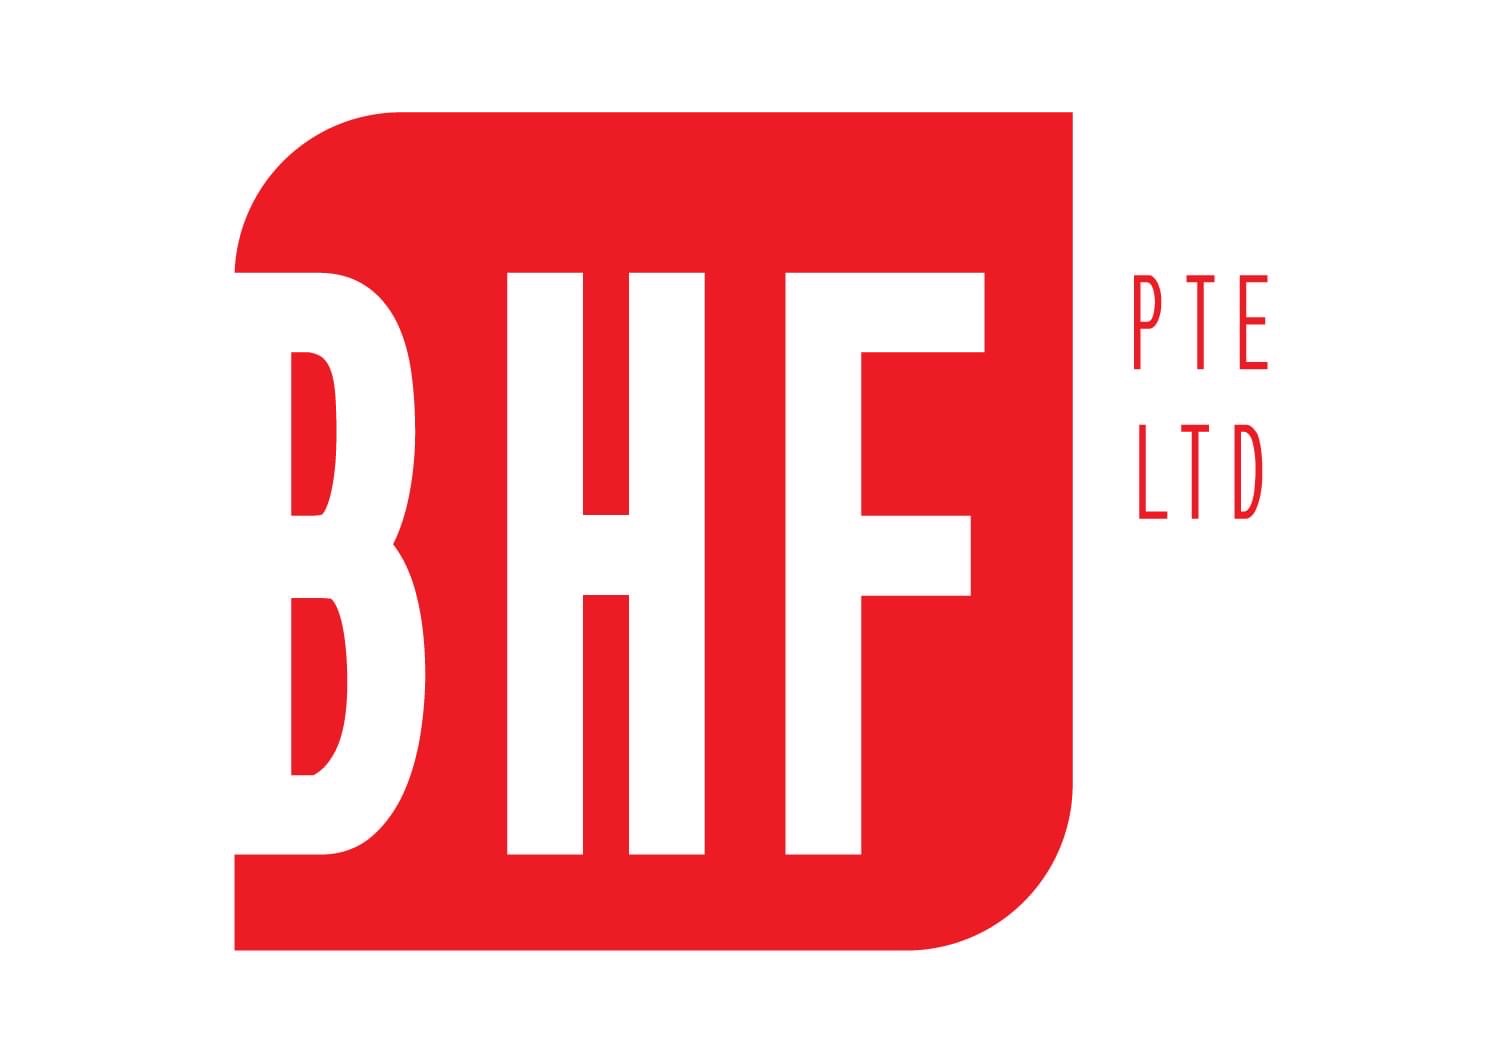 Bhf Pte. Ltd. company logo